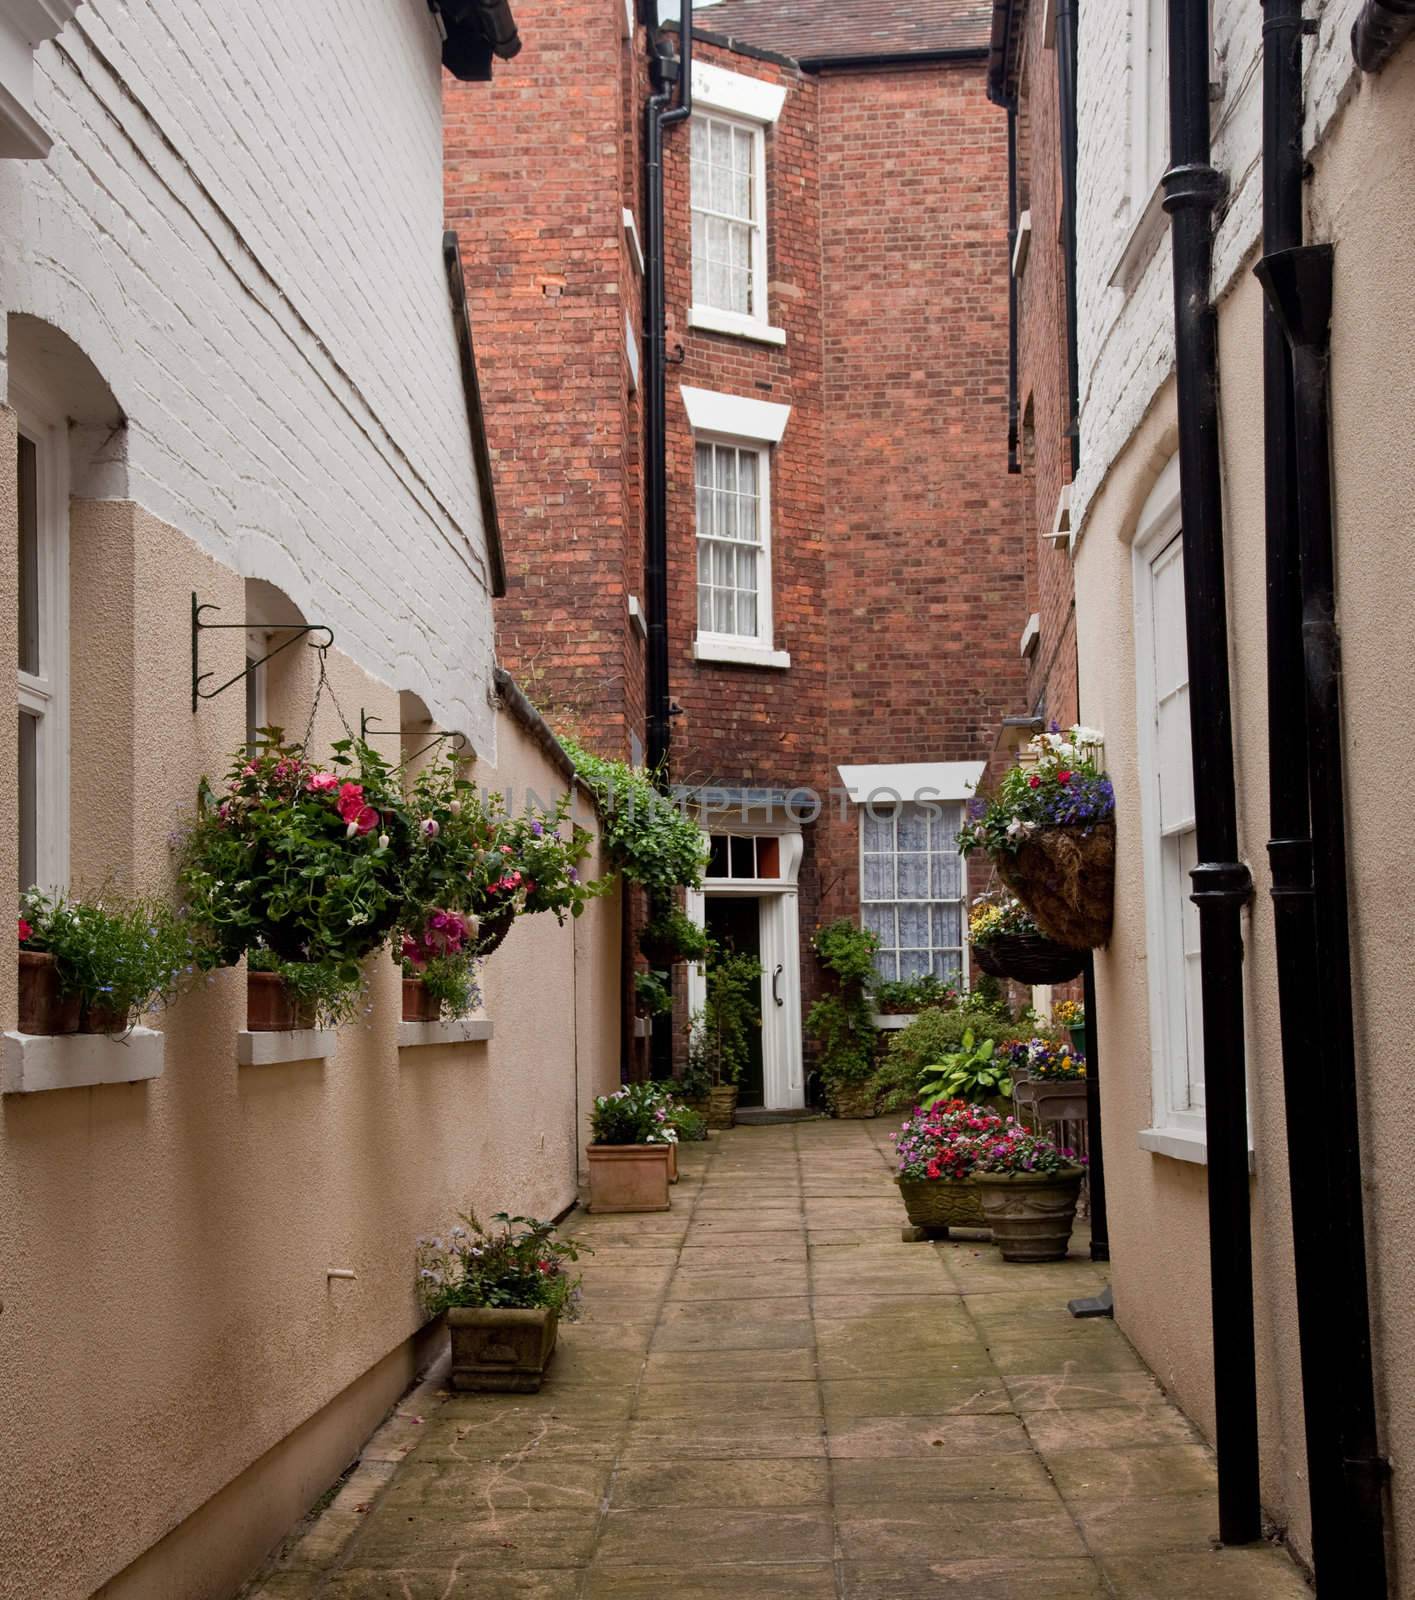 Flowering baskets lead to narrow alley in Shrewsbury